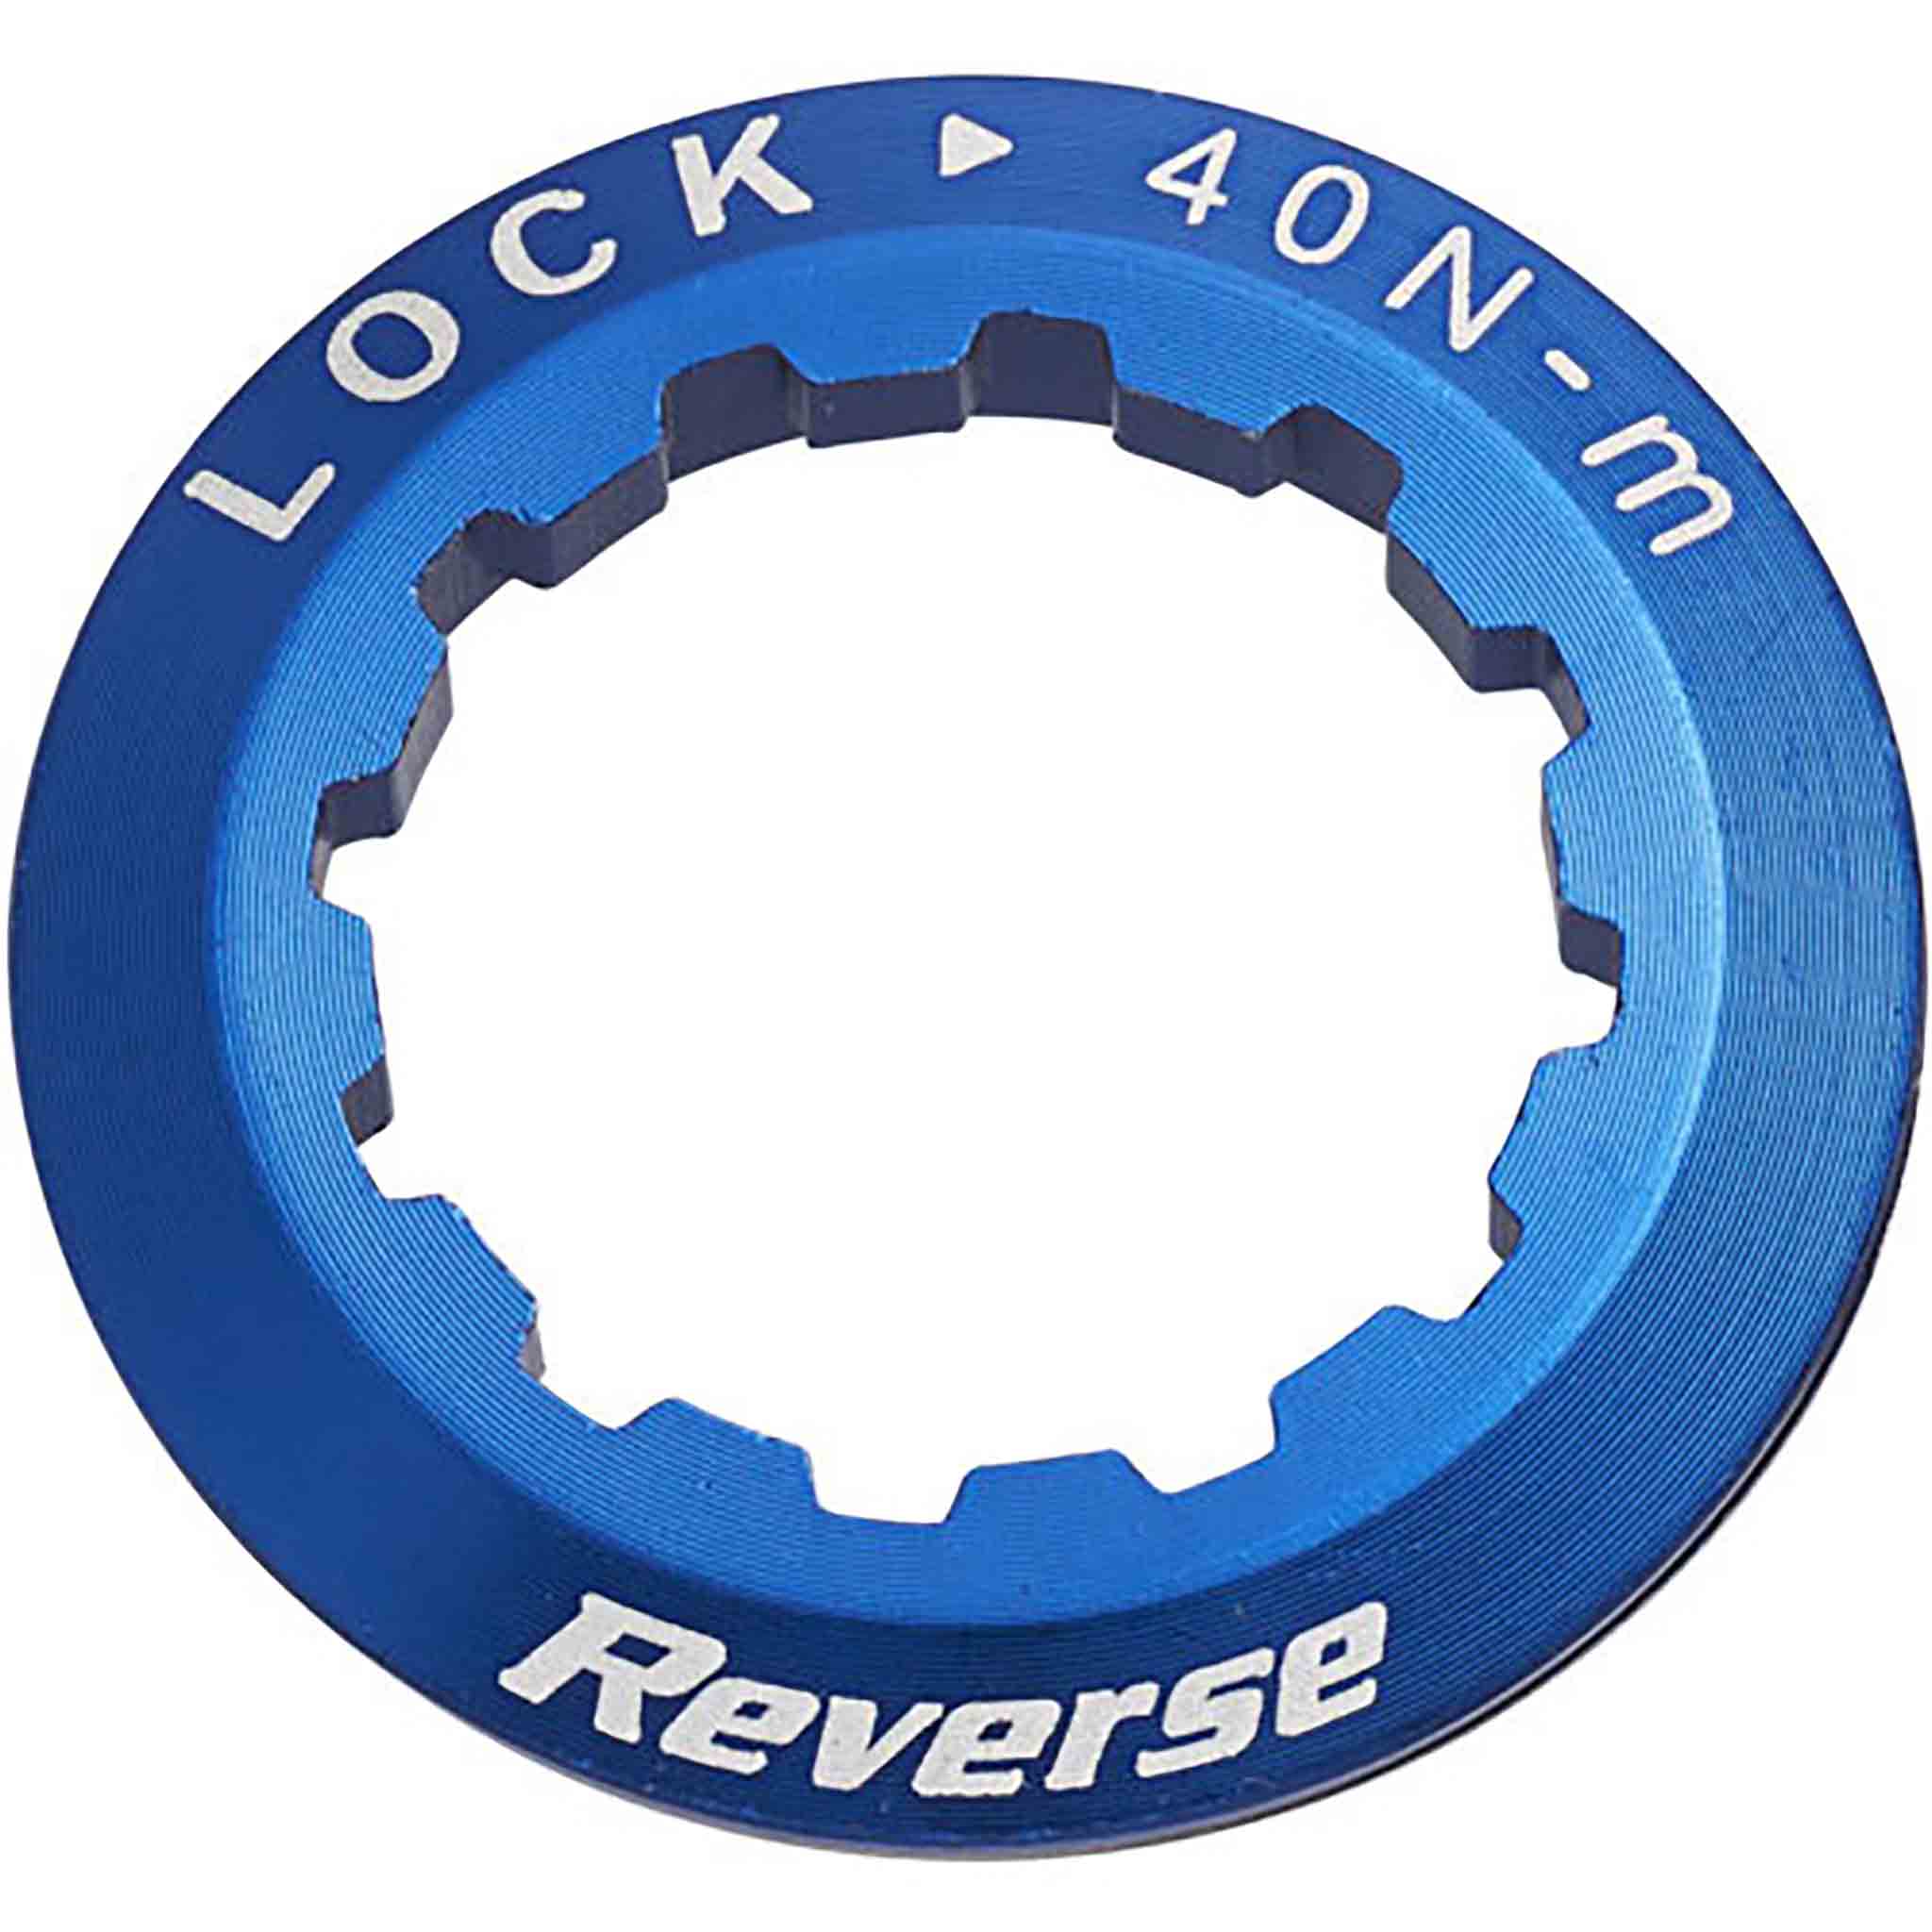 Reverse Cassette Lockring Blue